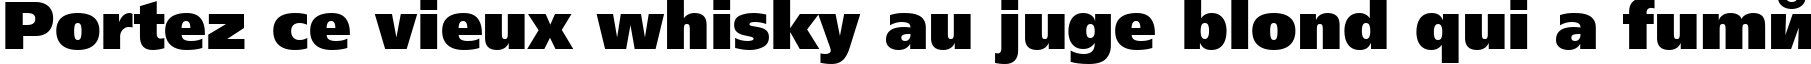 Пример написания шрифтом AG ForeignerULB Plain Medium текста на французском